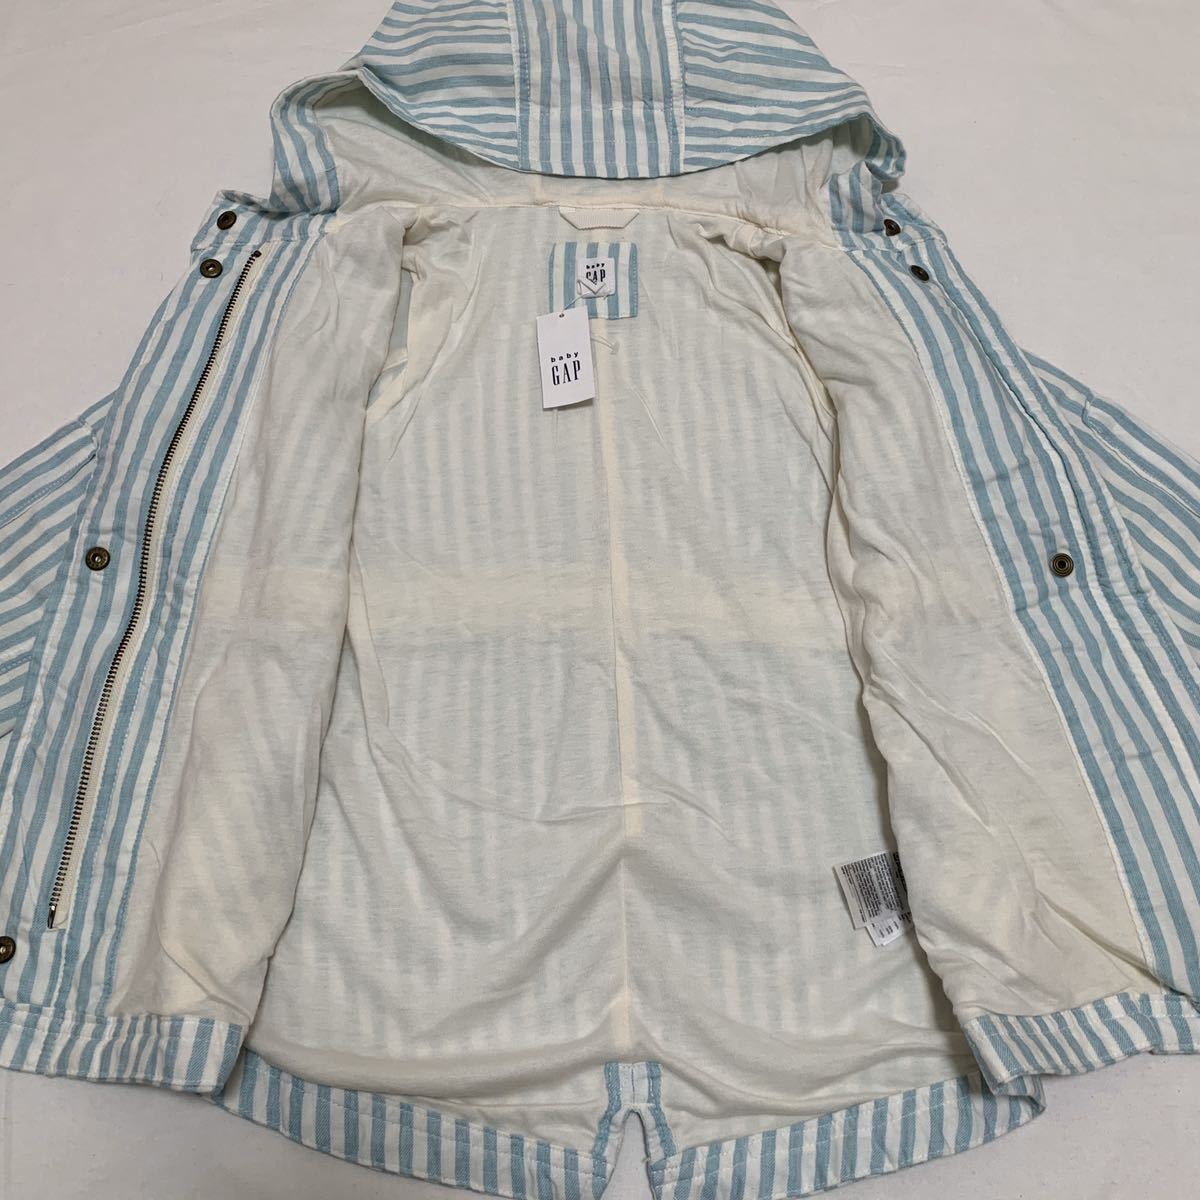  new goods regular price 7900 jpy baby Gap baby Gap stripe Parker jacket 105 coat 4 -years old 4T 100 110